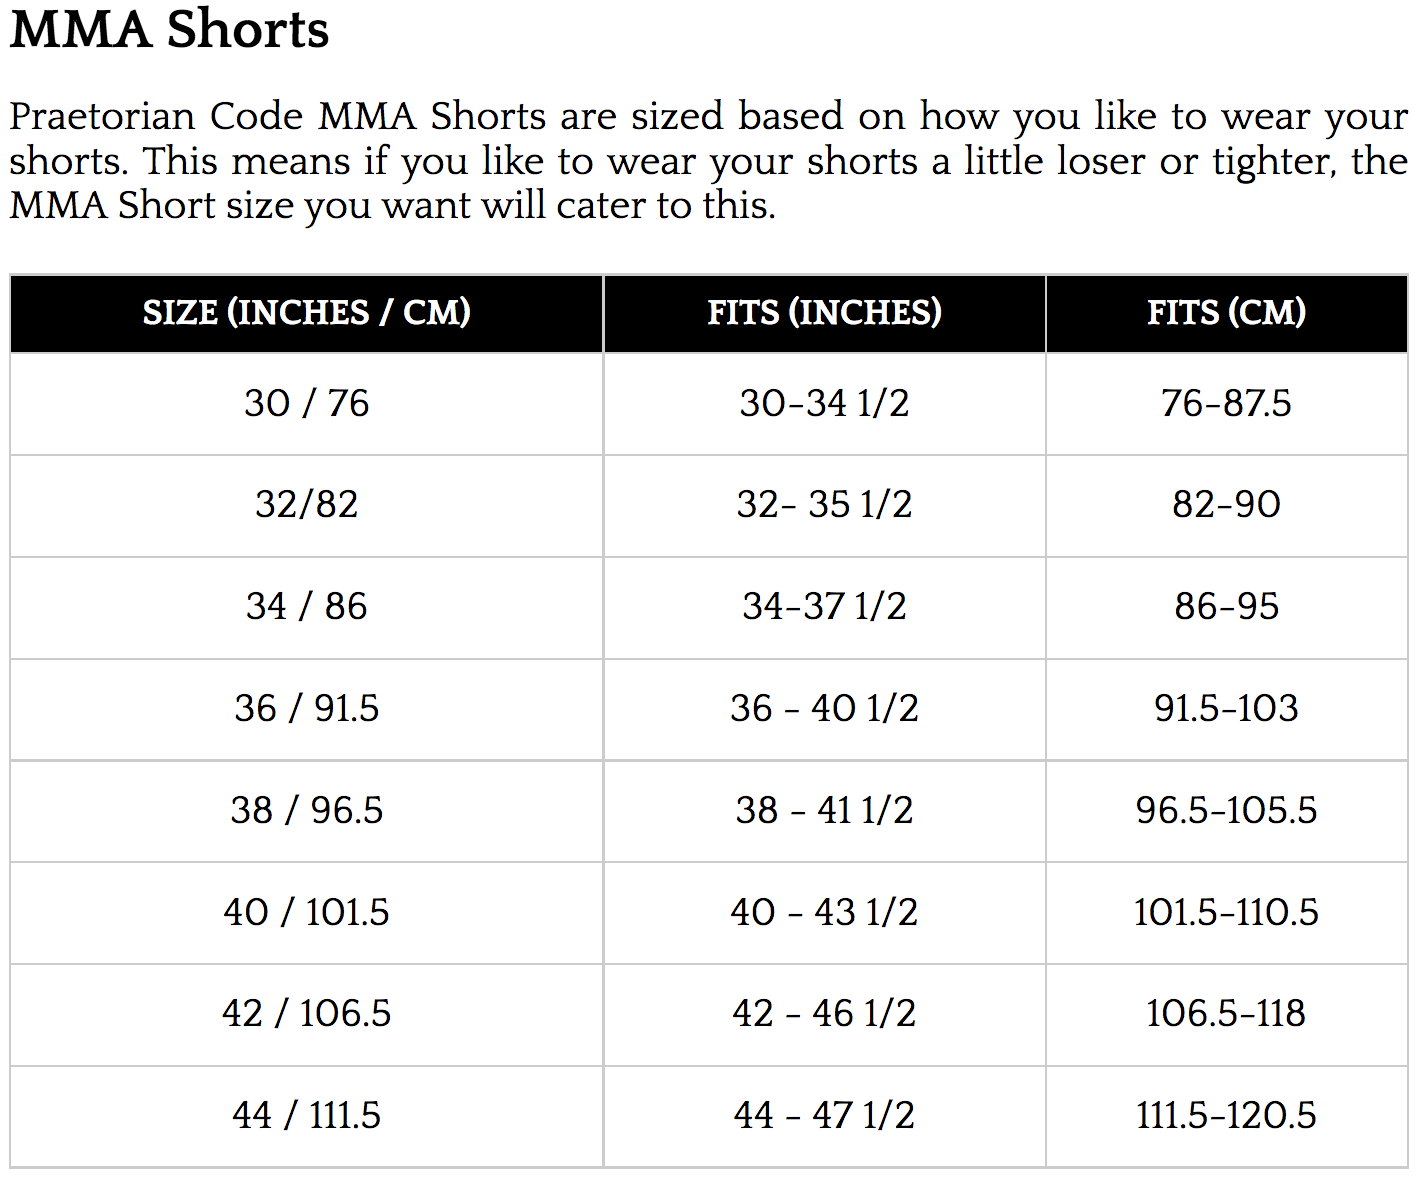 MMA Shorts | Performance and Comfort | Praetorian Code